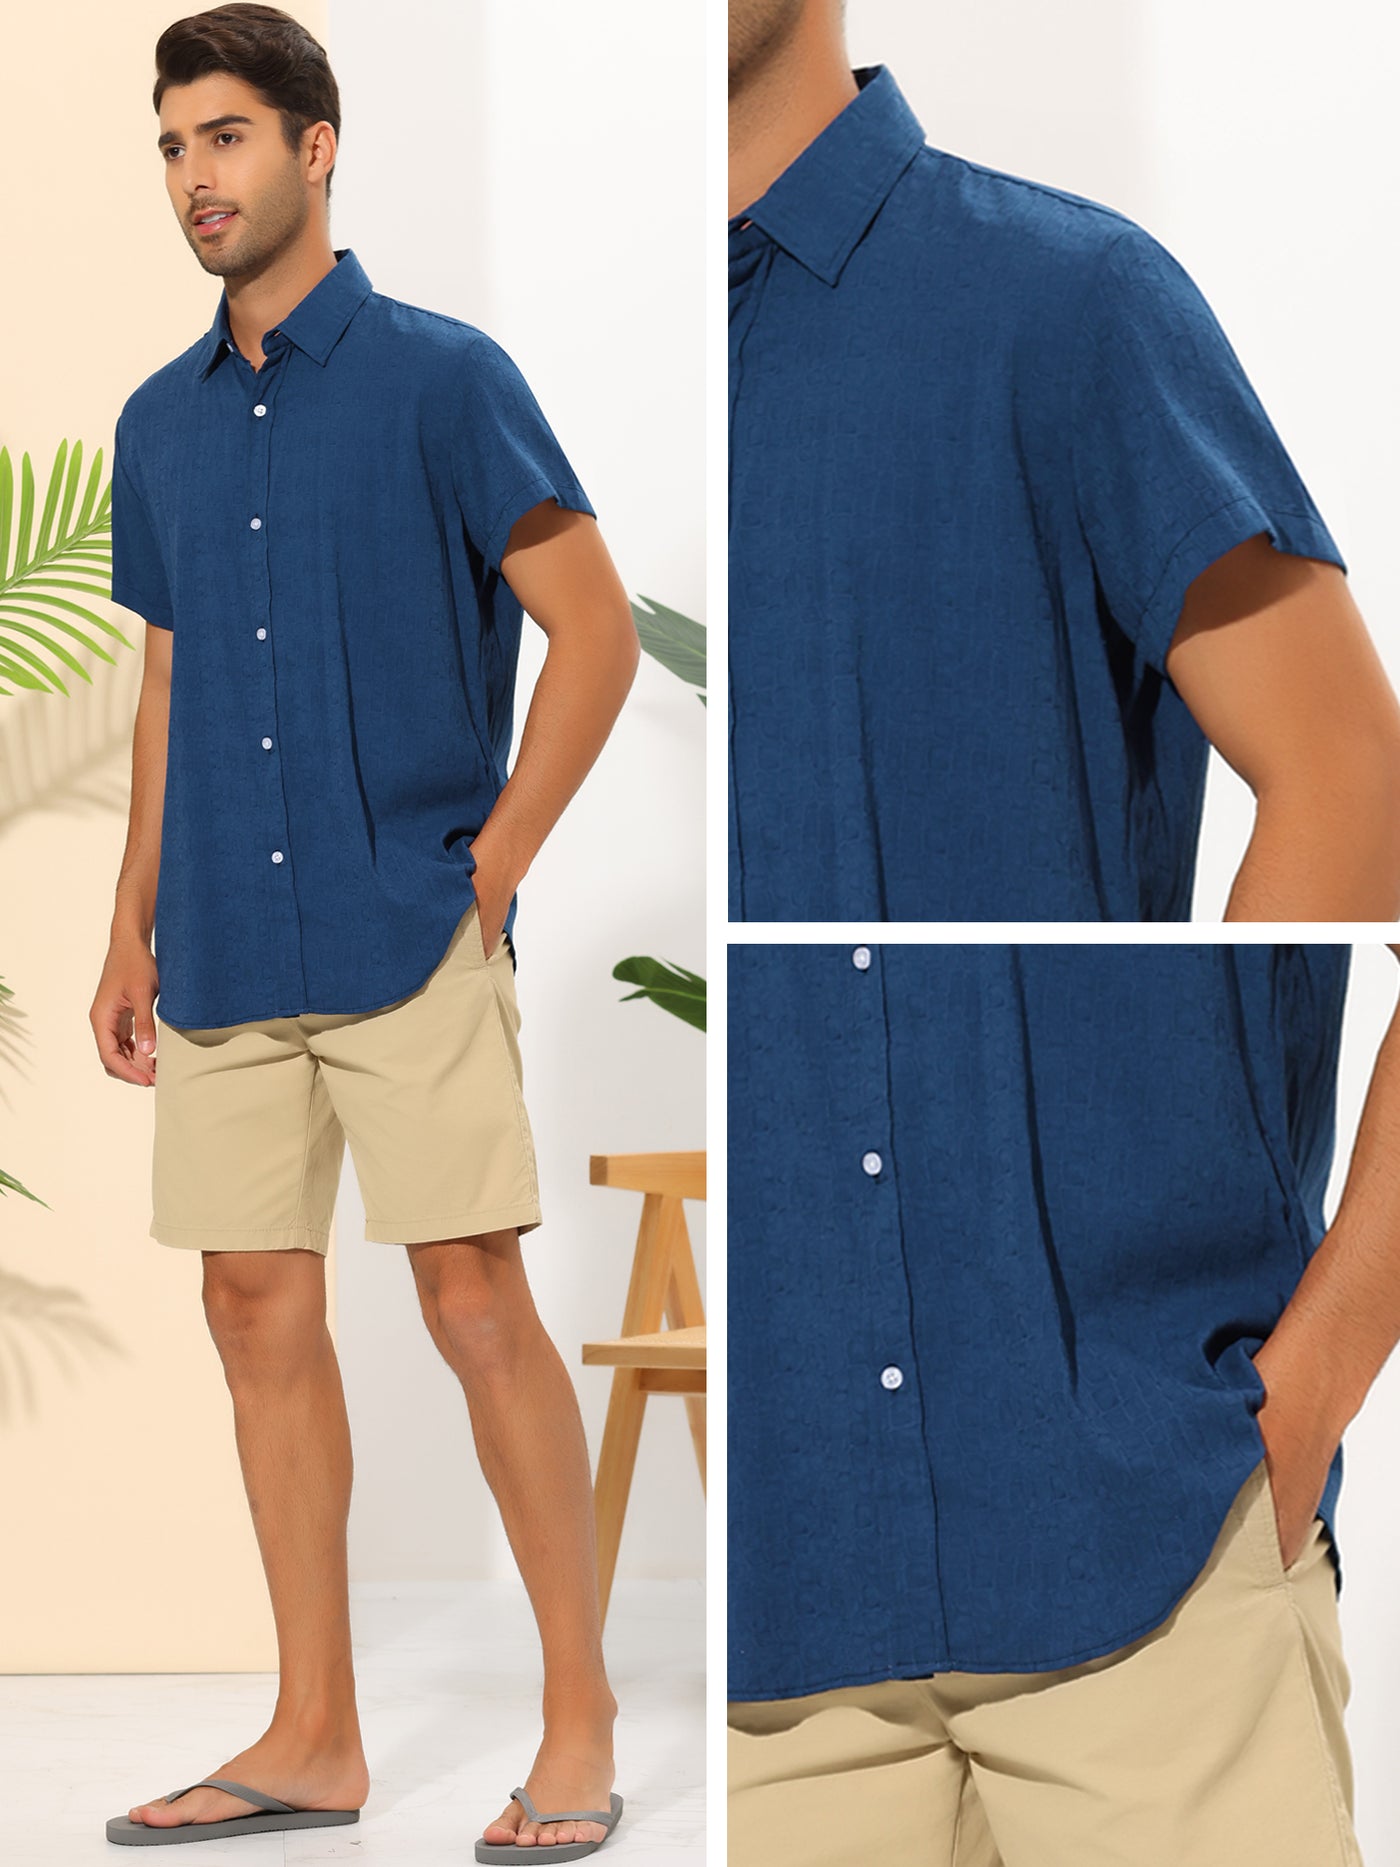 Bublédon Summer Shirts for Men's Solid Color Short Sleeve Button Down Regular Fit Hawaiian Shirt Tops